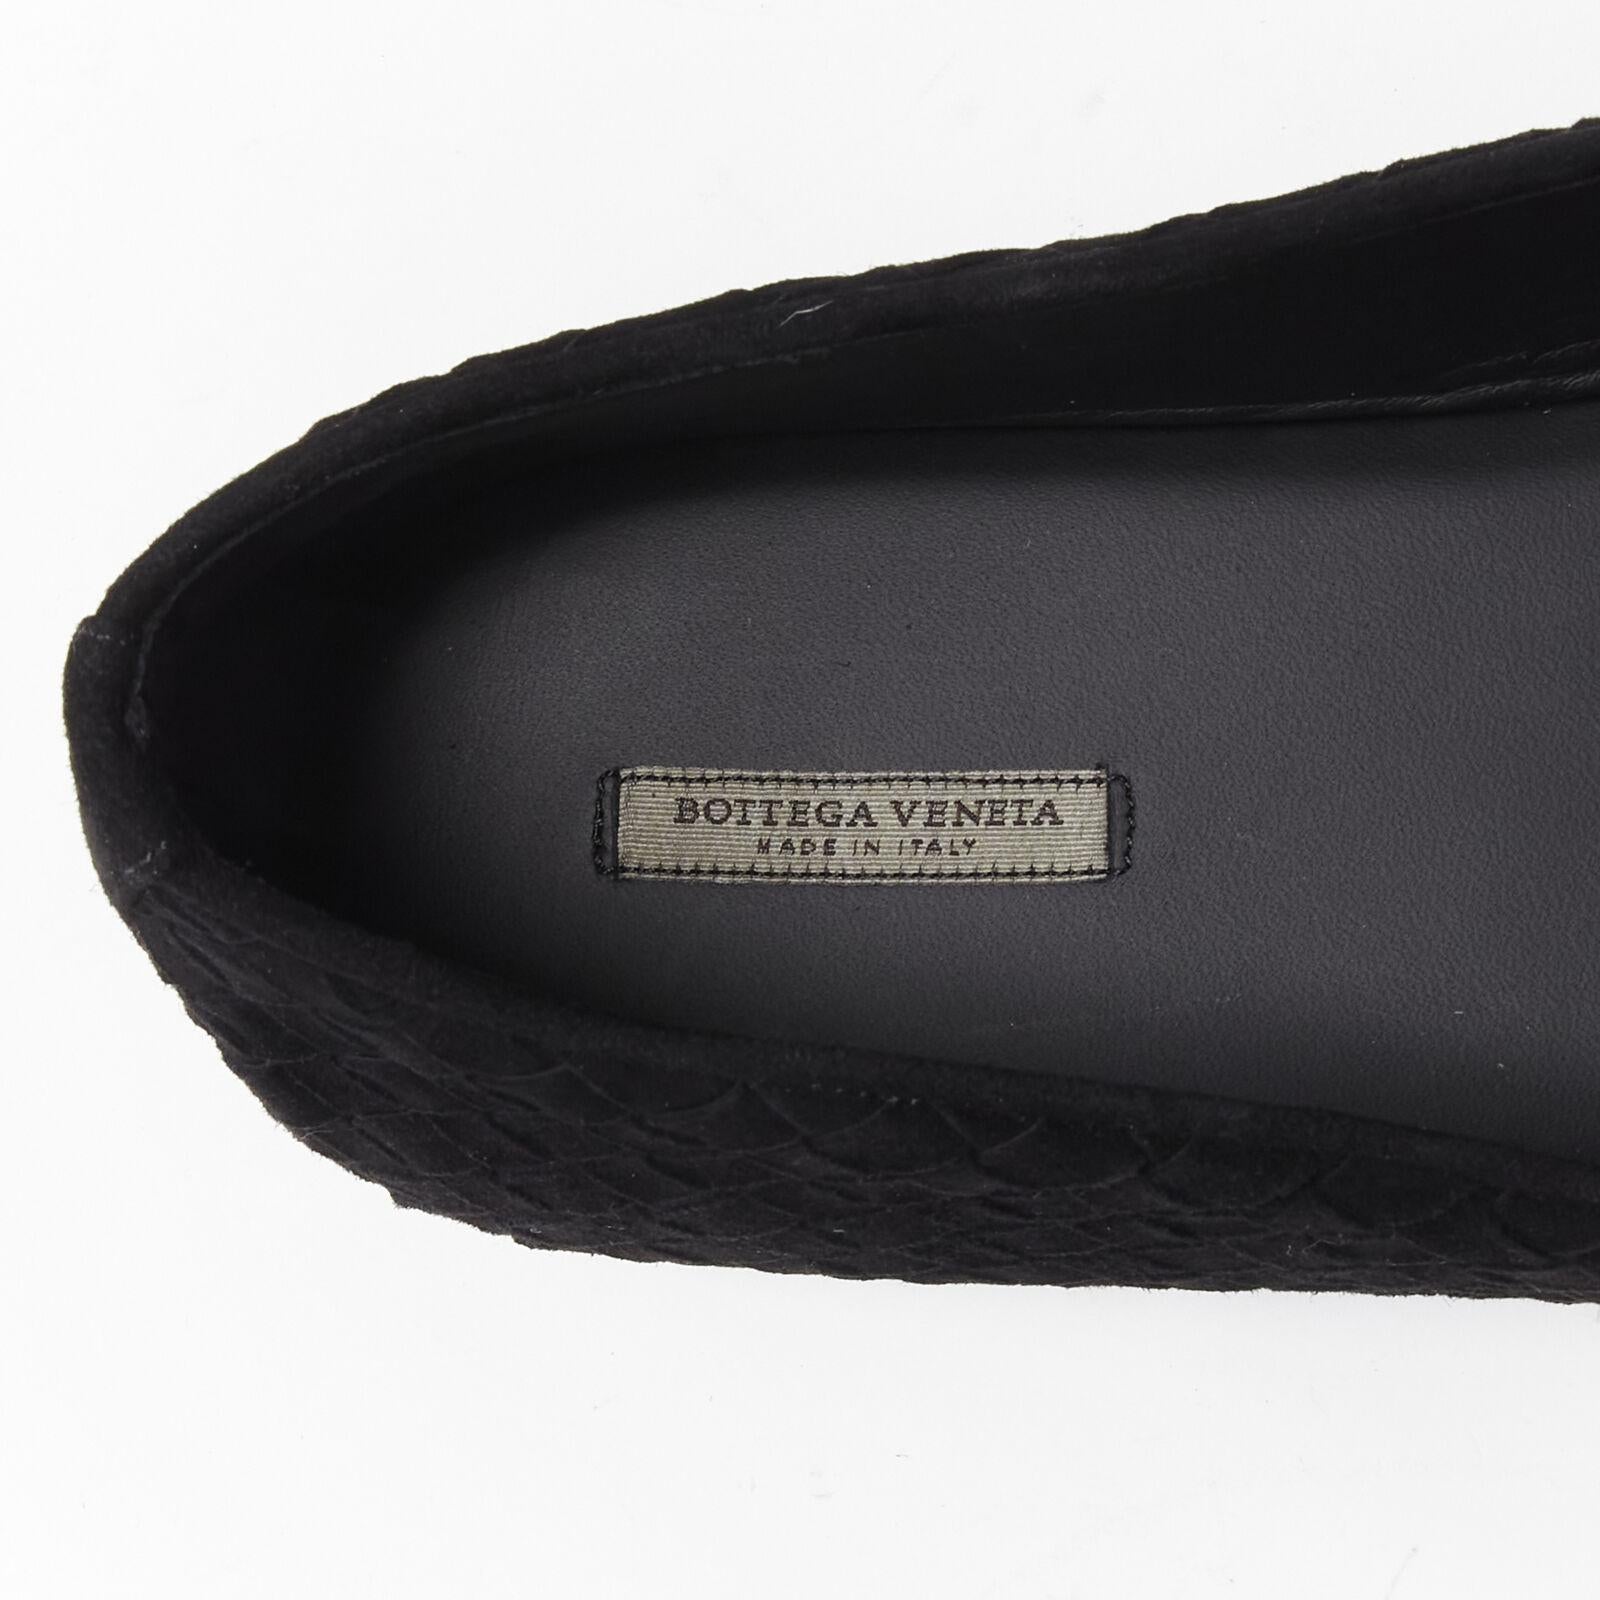 new BOTTEGA VENETA Intrecciato Luxe suede black woven dress loafer shoes EU42.5 4